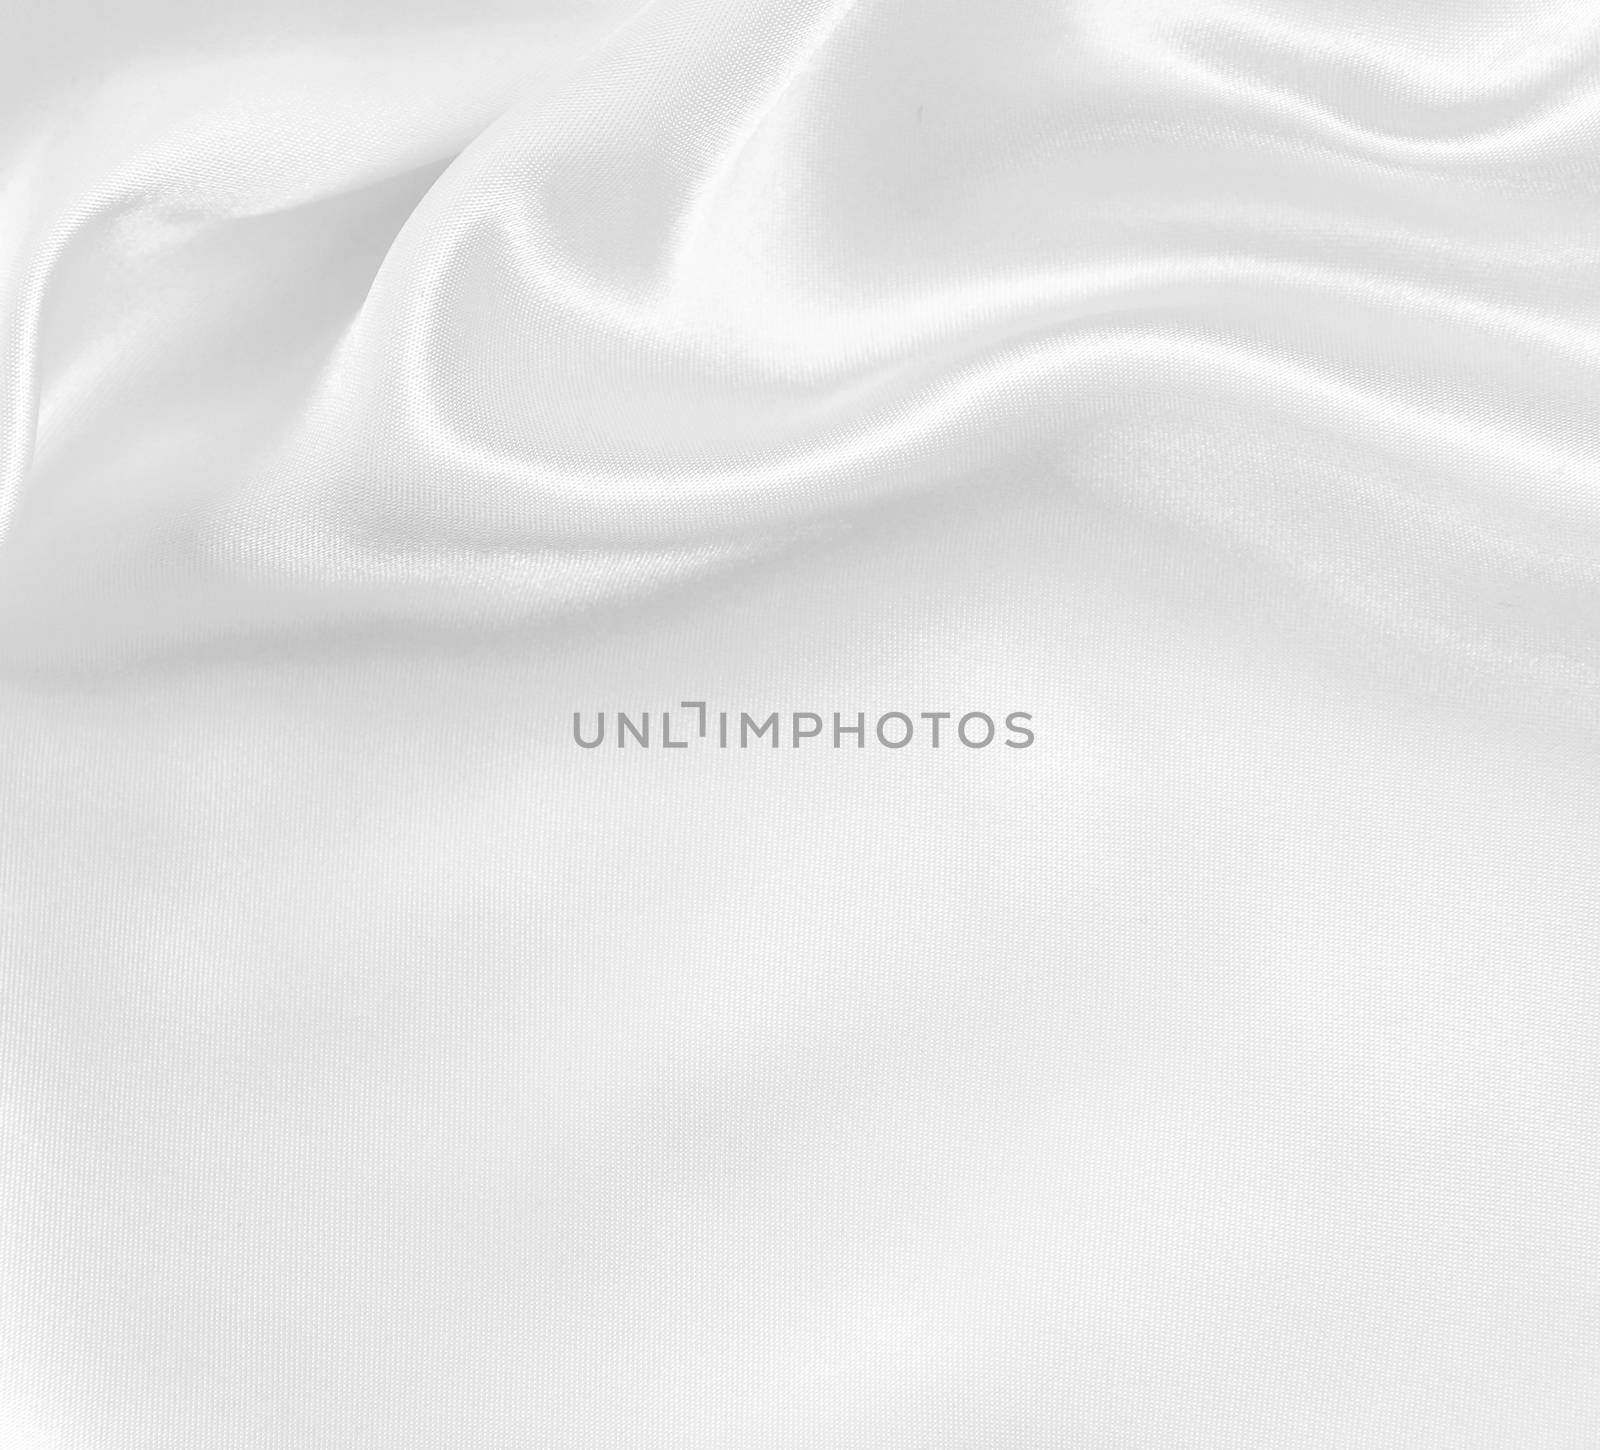 Smooth elegant white silk or satin texture as wedding background by oxanatravel